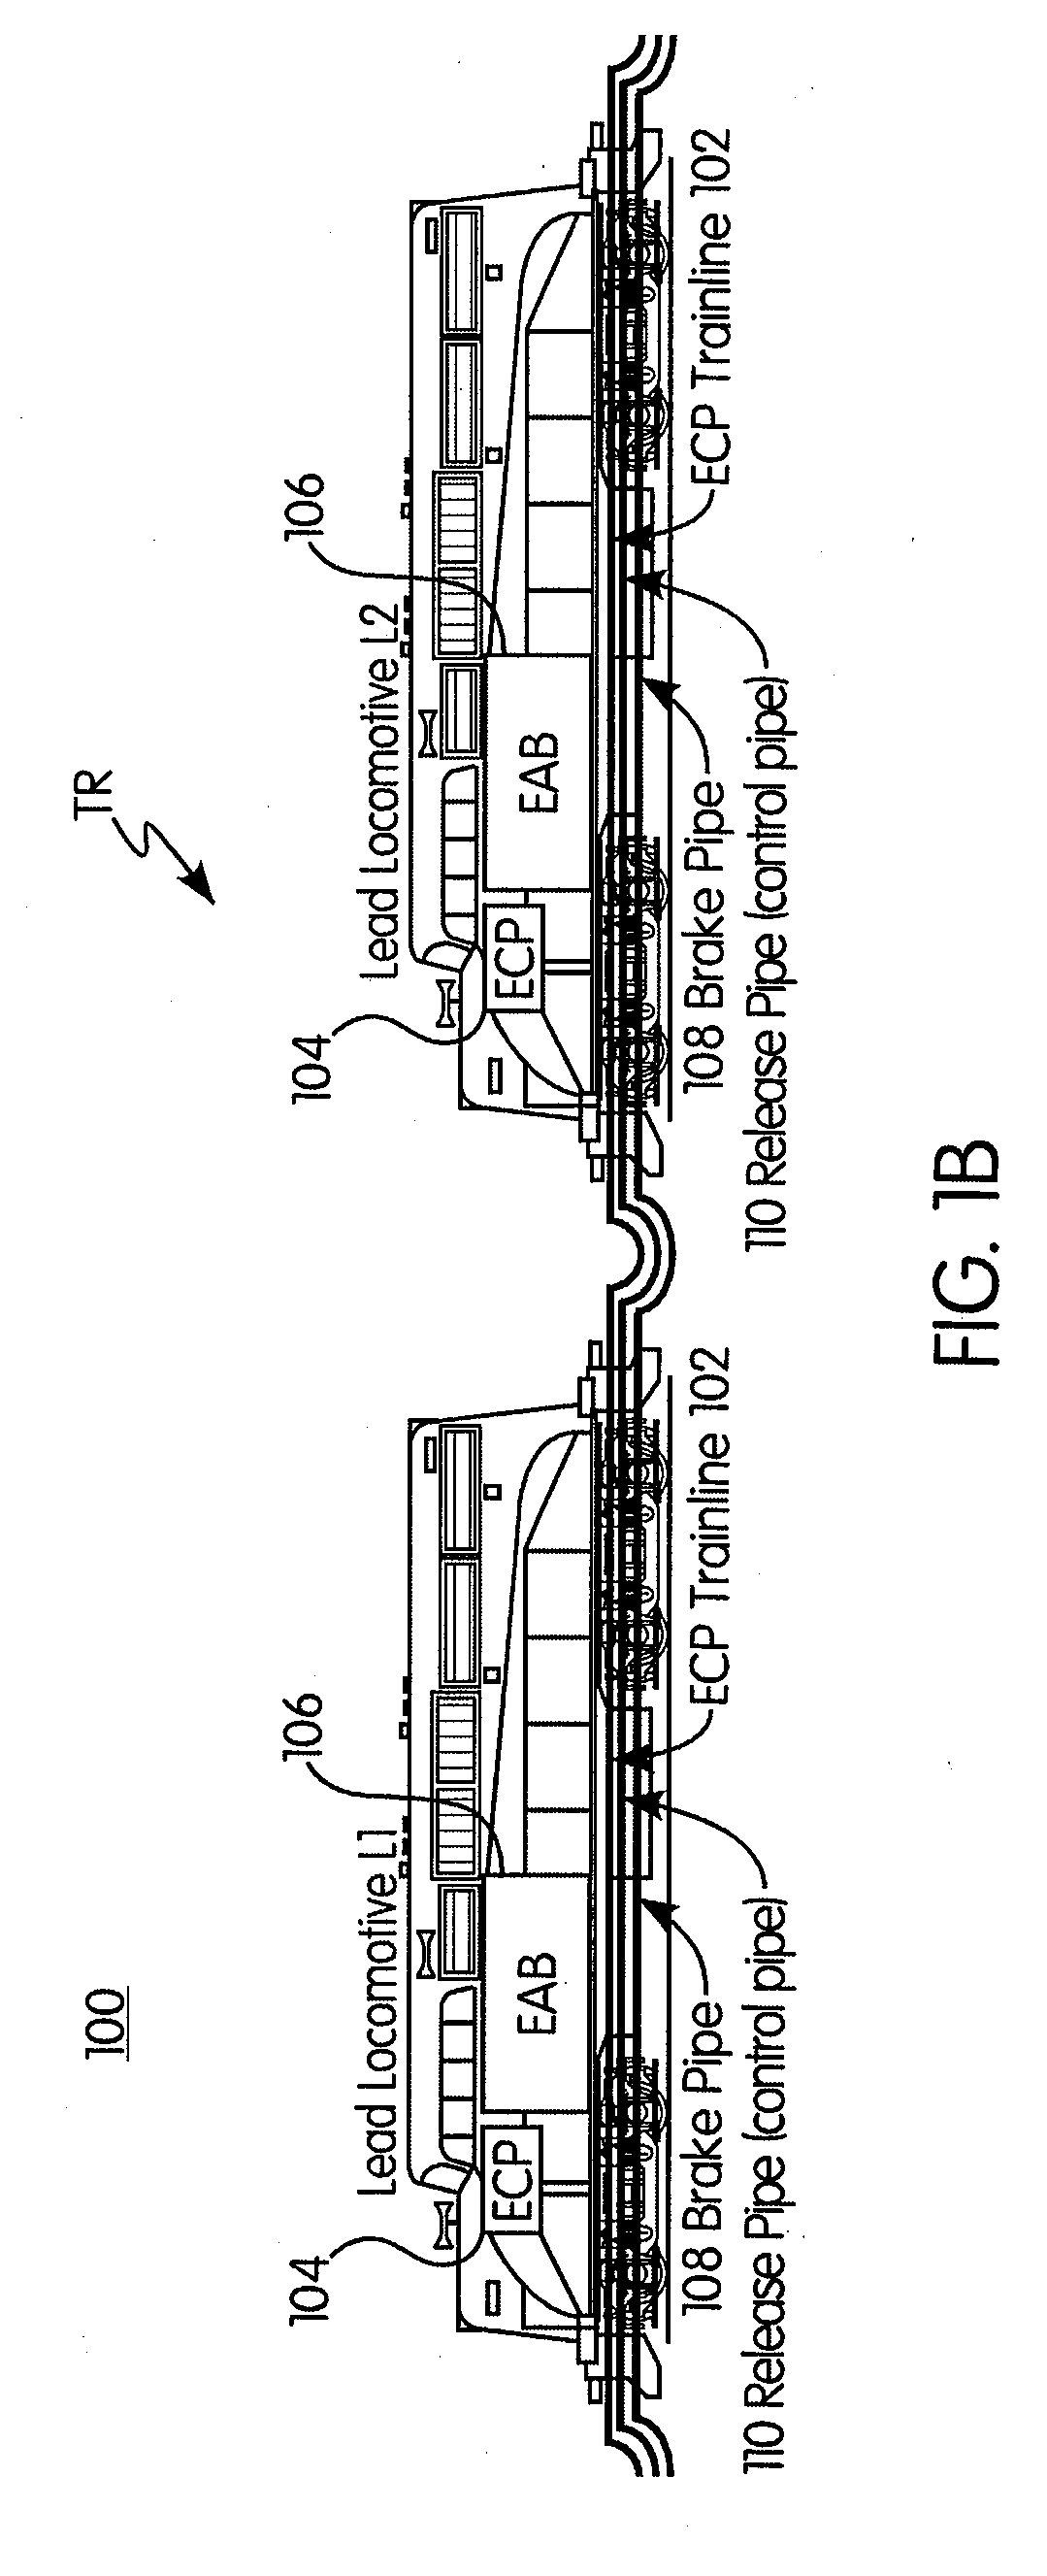 Train Brake Control System And Method